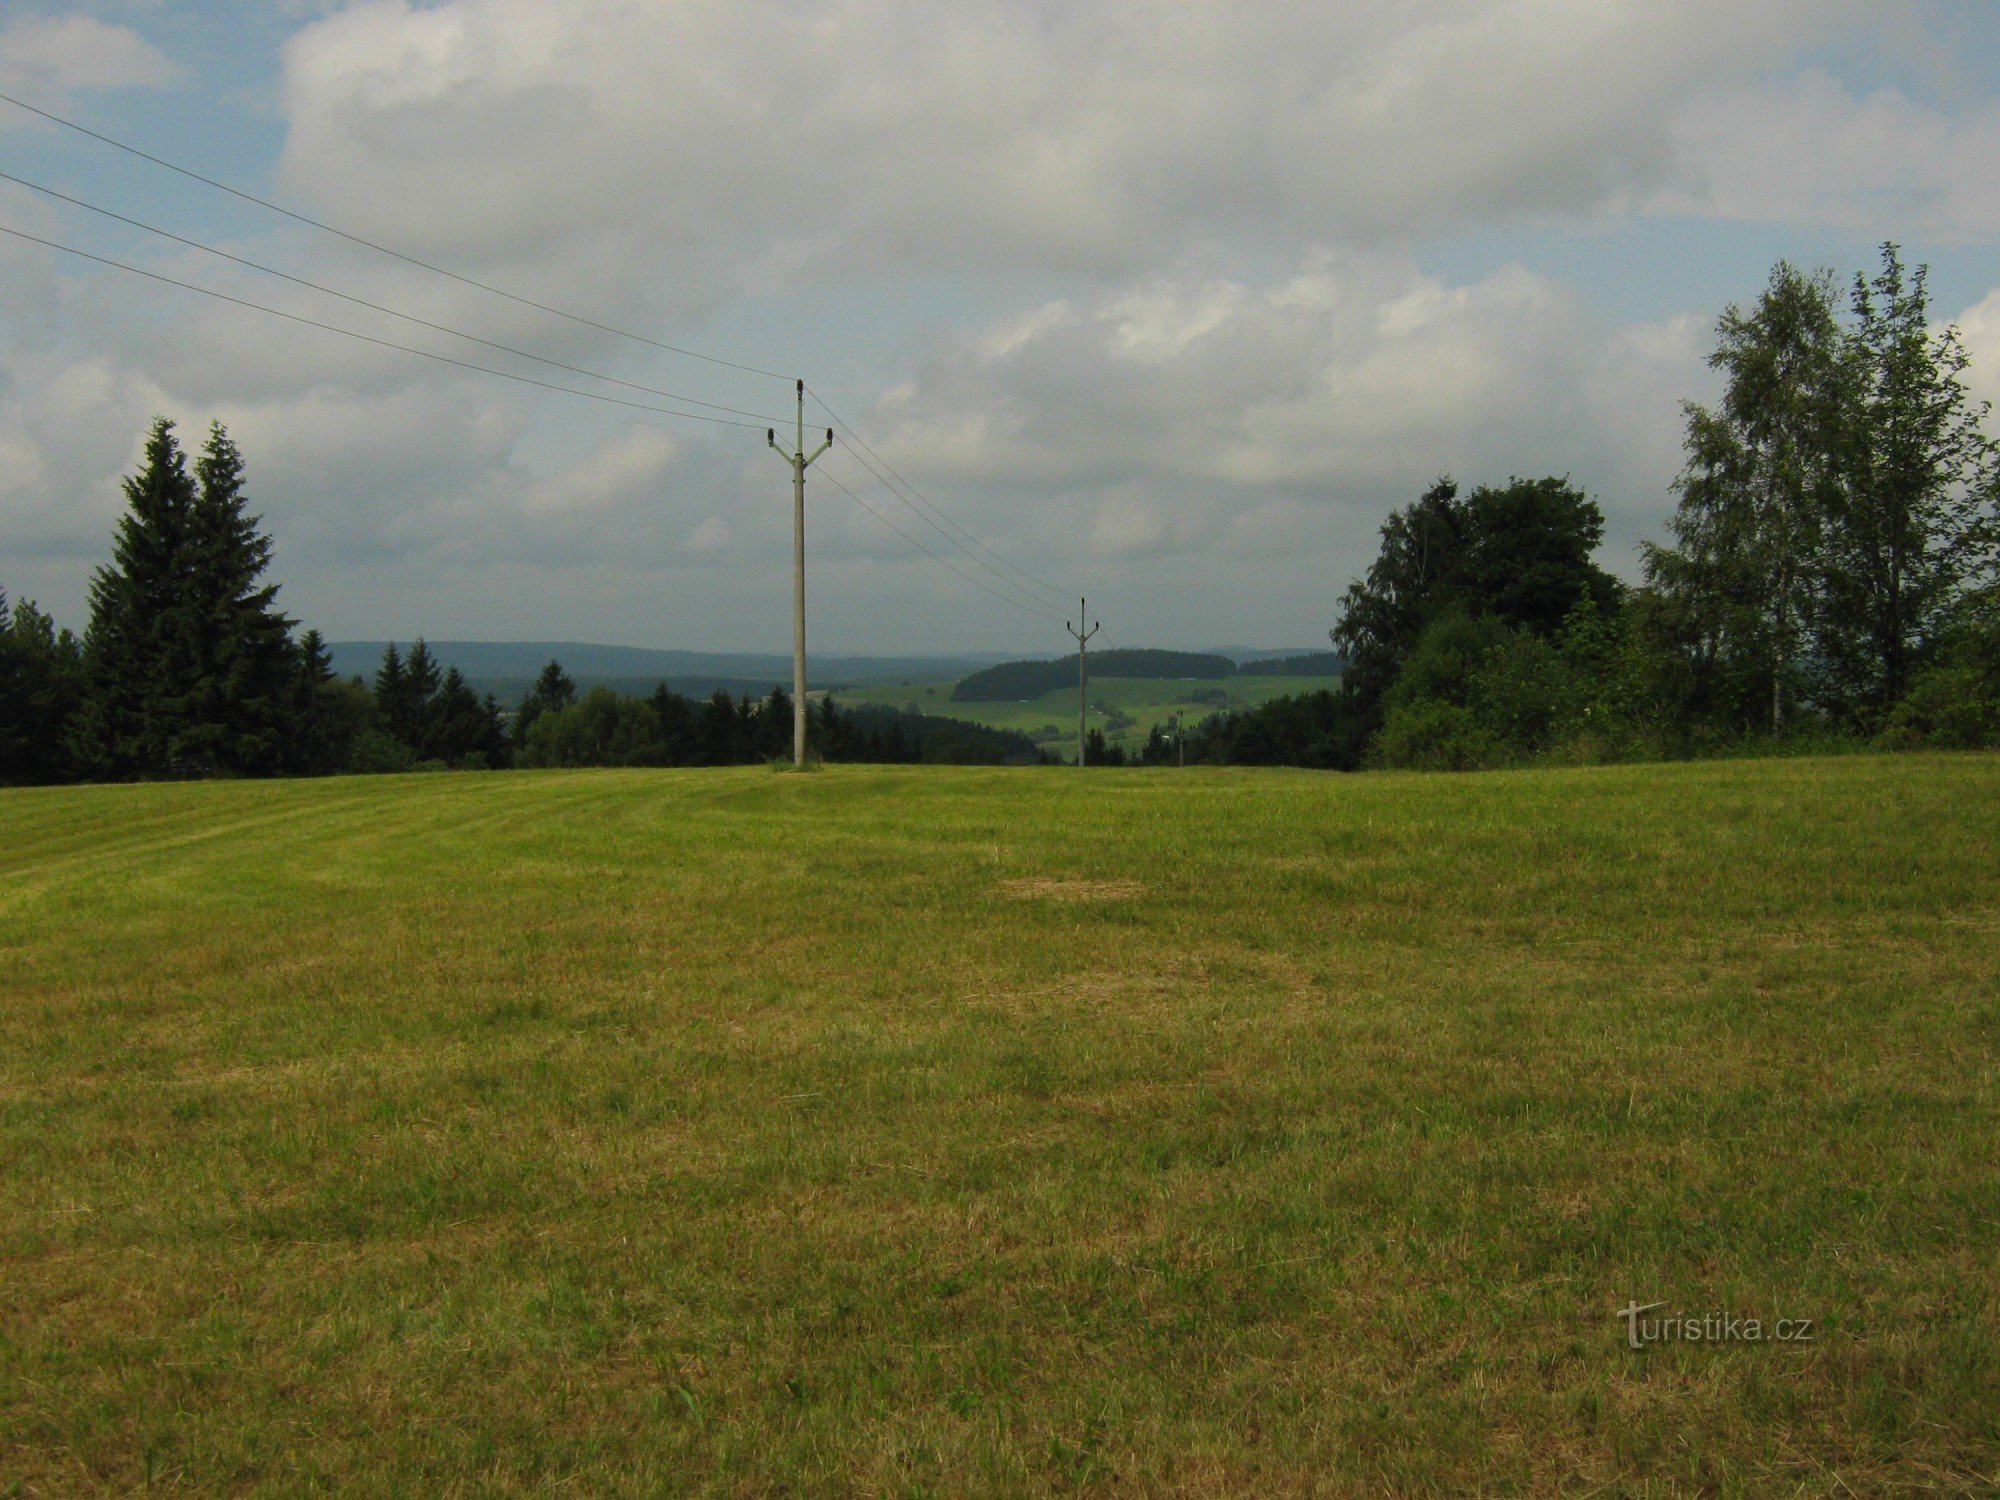 Vedere de la dealul Loucké la Svratka